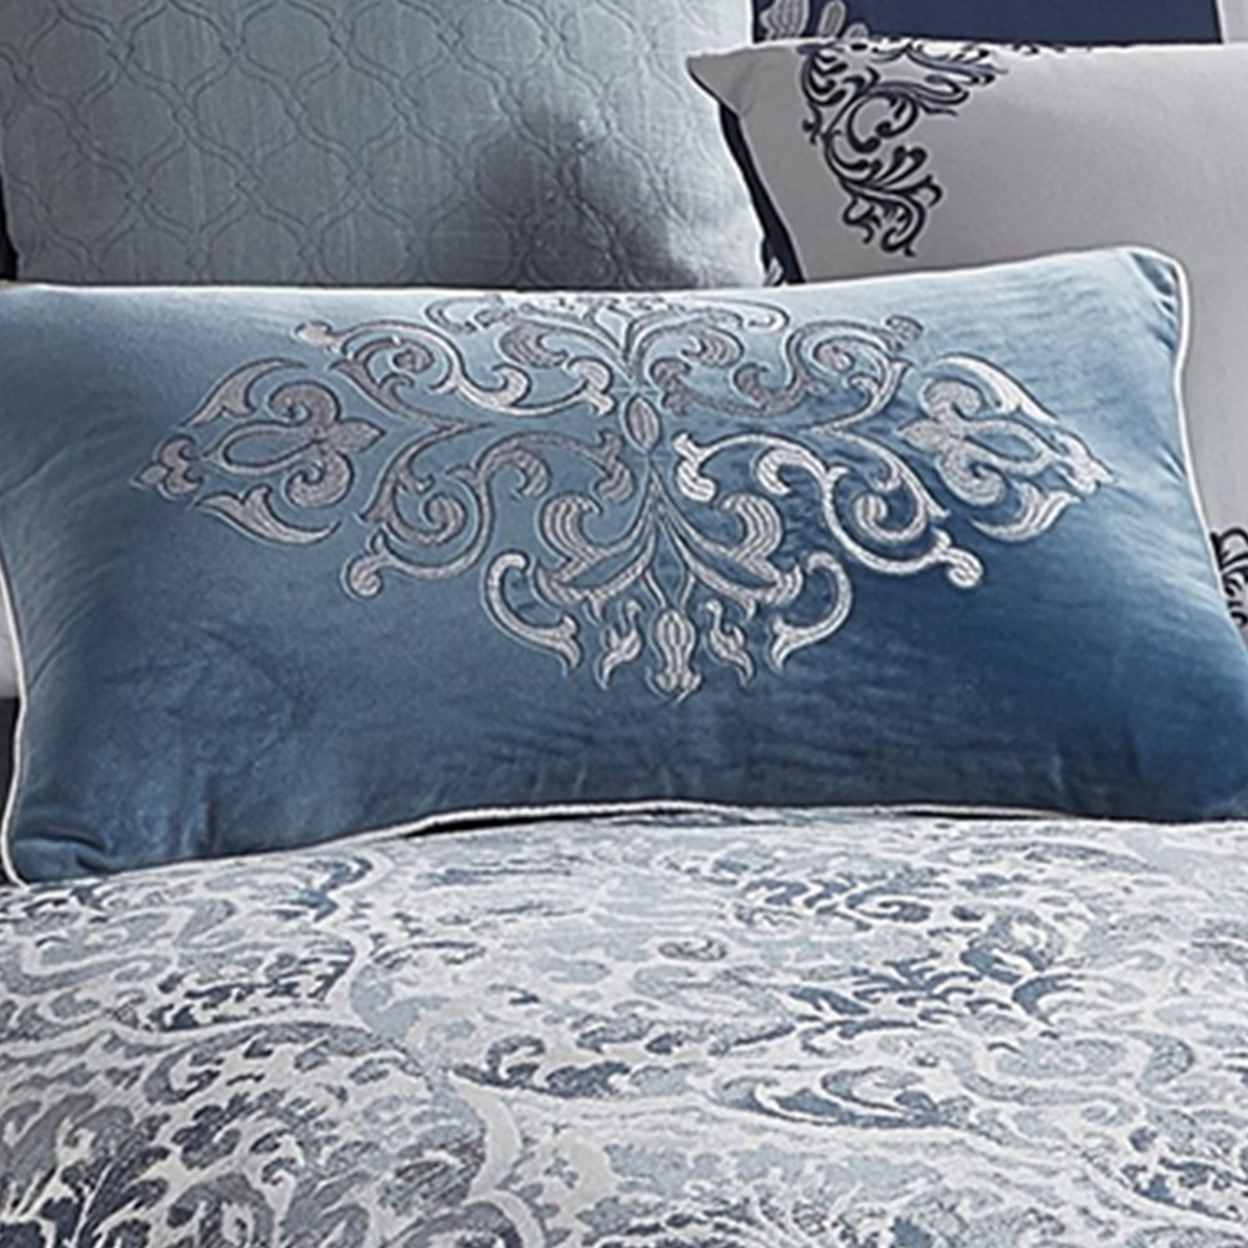 10 Piece King Polyester Comforter Set With Damask Prints, Blue And Gray- Saltoro Sherpi